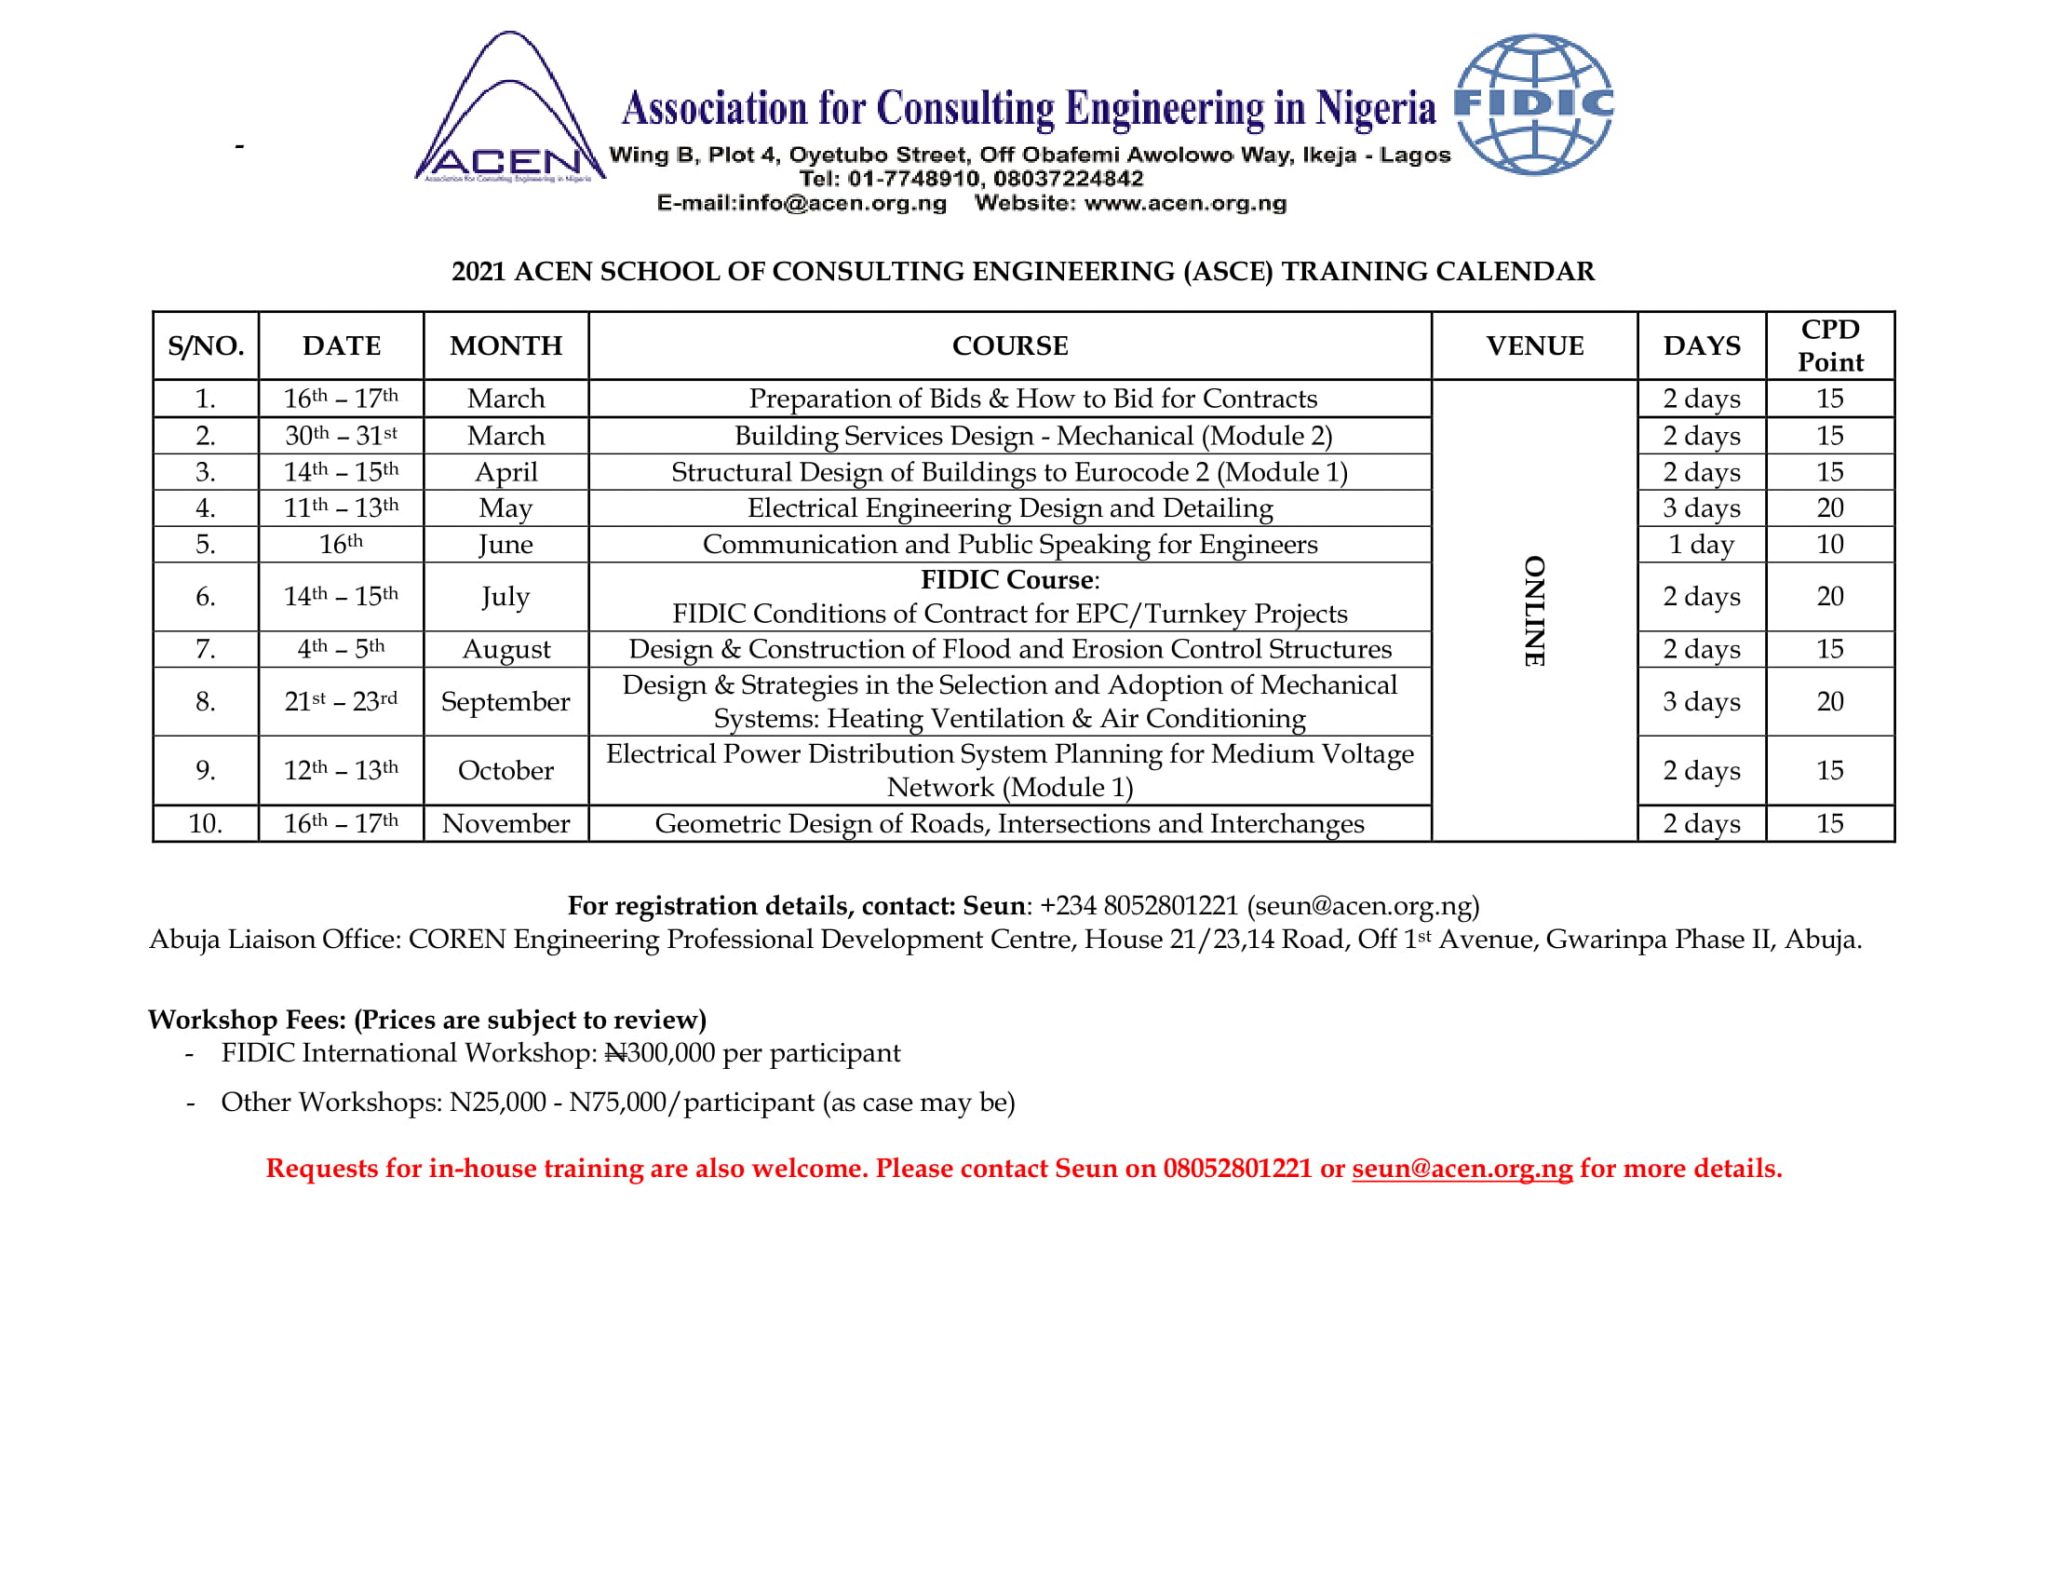 2021 ASCE Training Calendar Online Association For Consulting